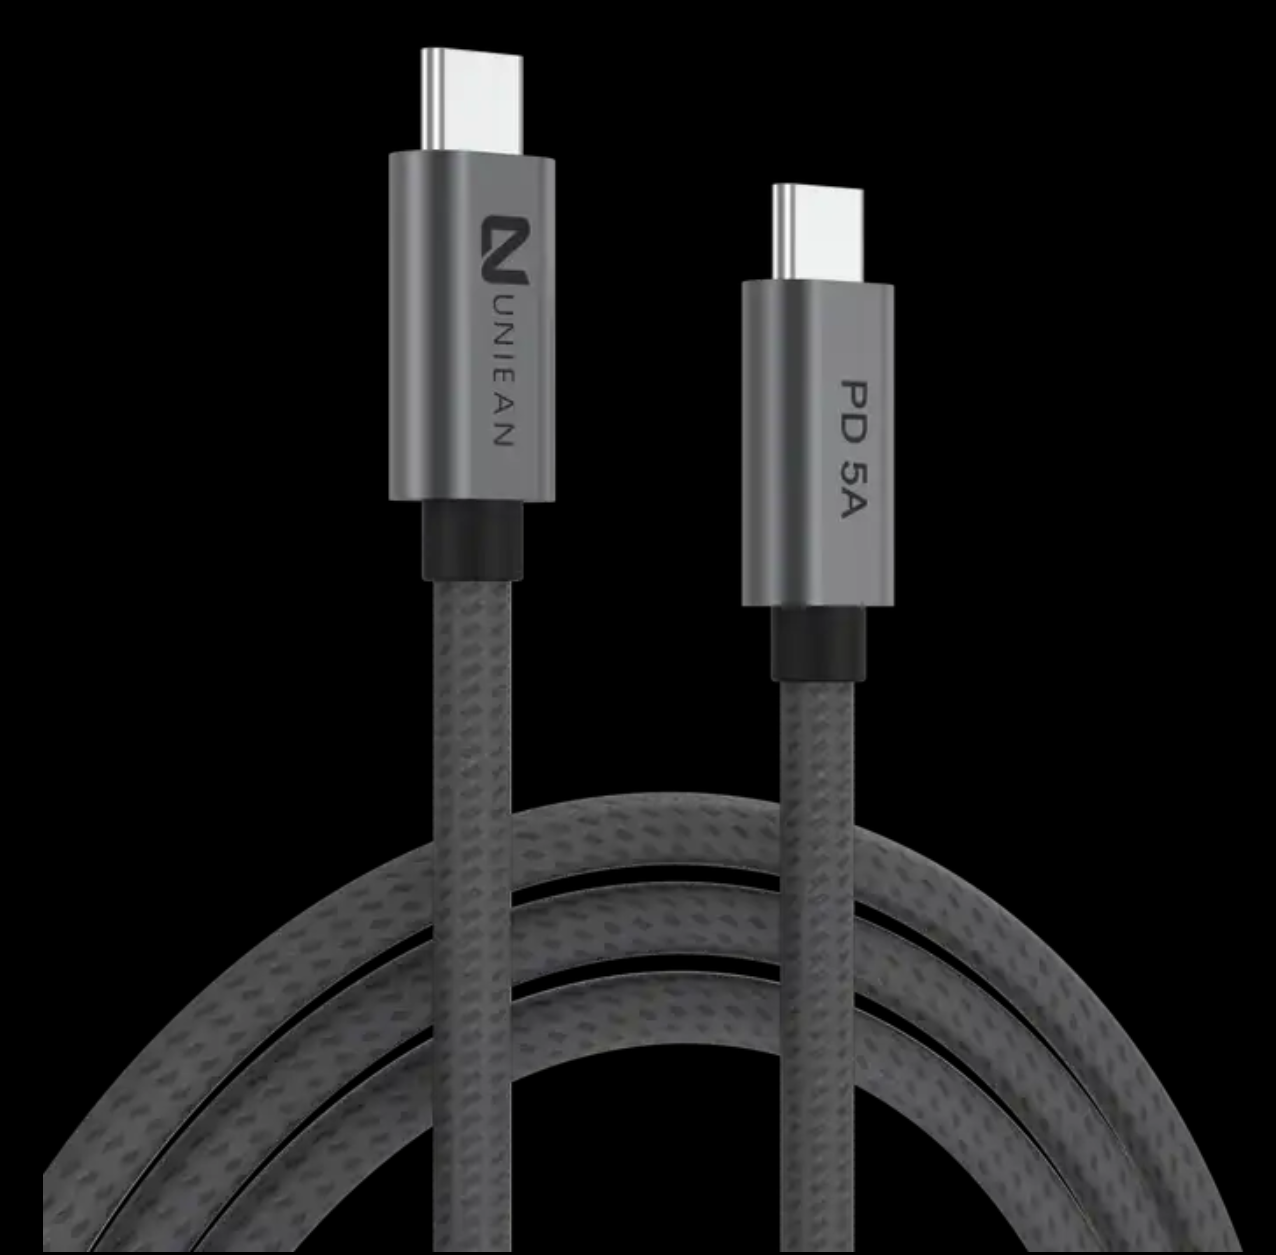 Yulian USB3.2 Gen2*2 Kabel | voll ausgestattetes koaxiales C2C | 1m